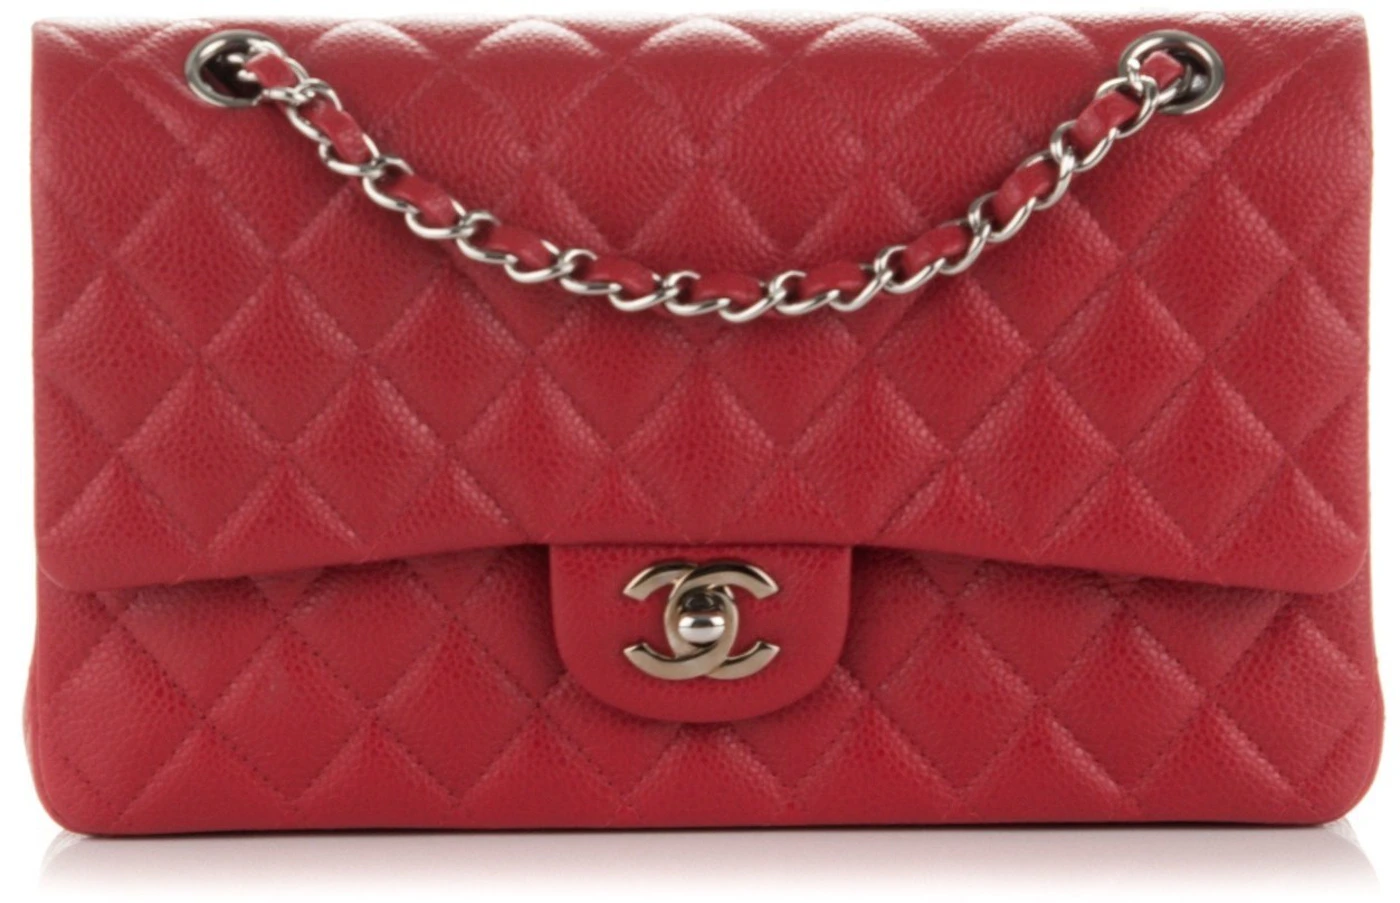 Chanel Chevron Caviar Jumbo Red Double Flap Bag